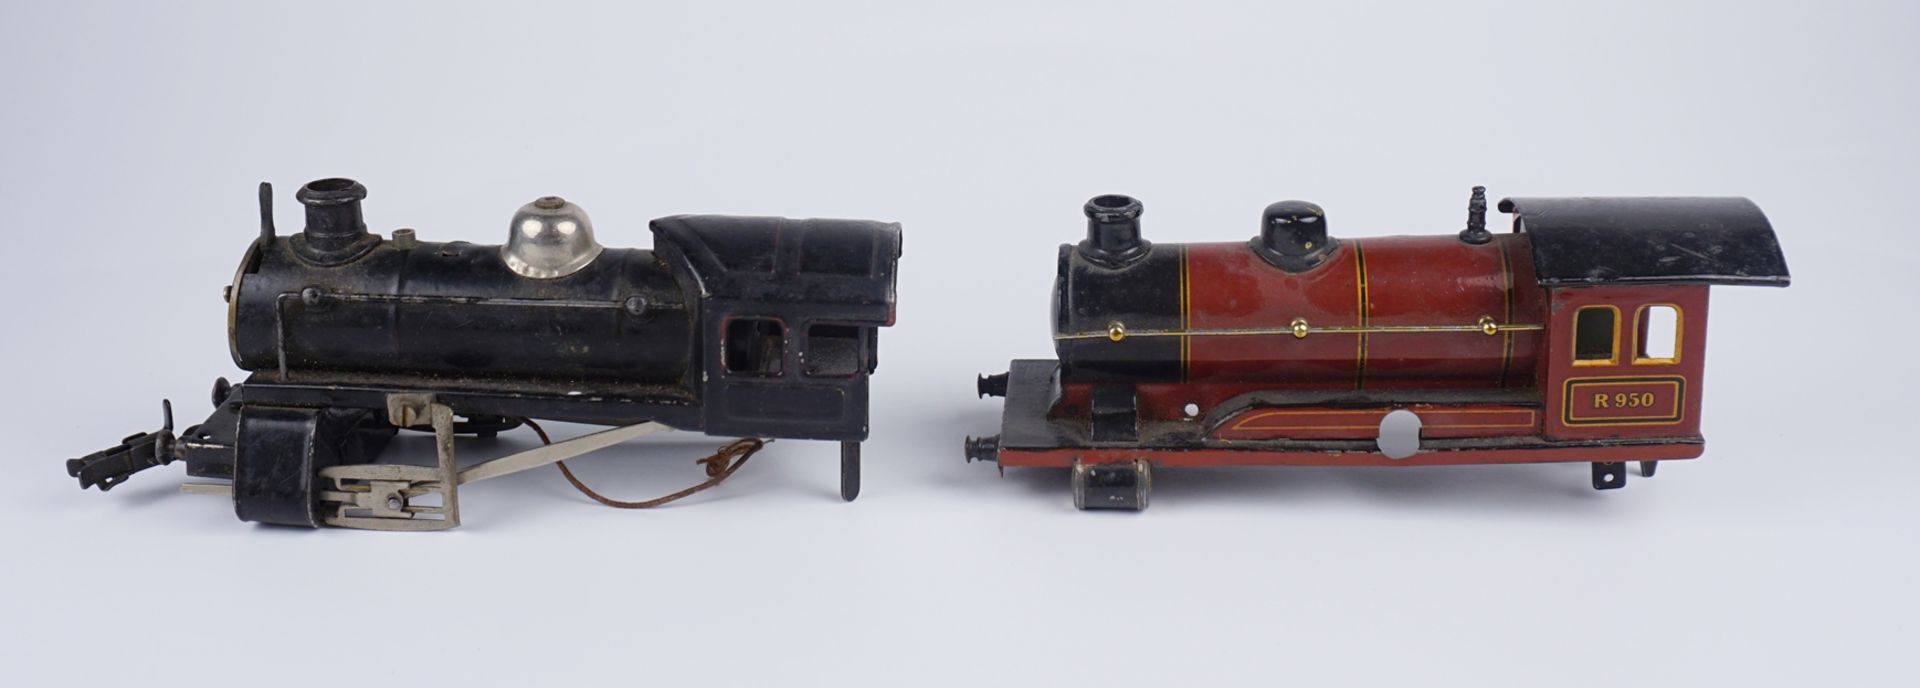 2 Lokgehäuse, Spur 0, Märklin und KBN (Karl Bub), 1930er Jahre - Image 2 of 3